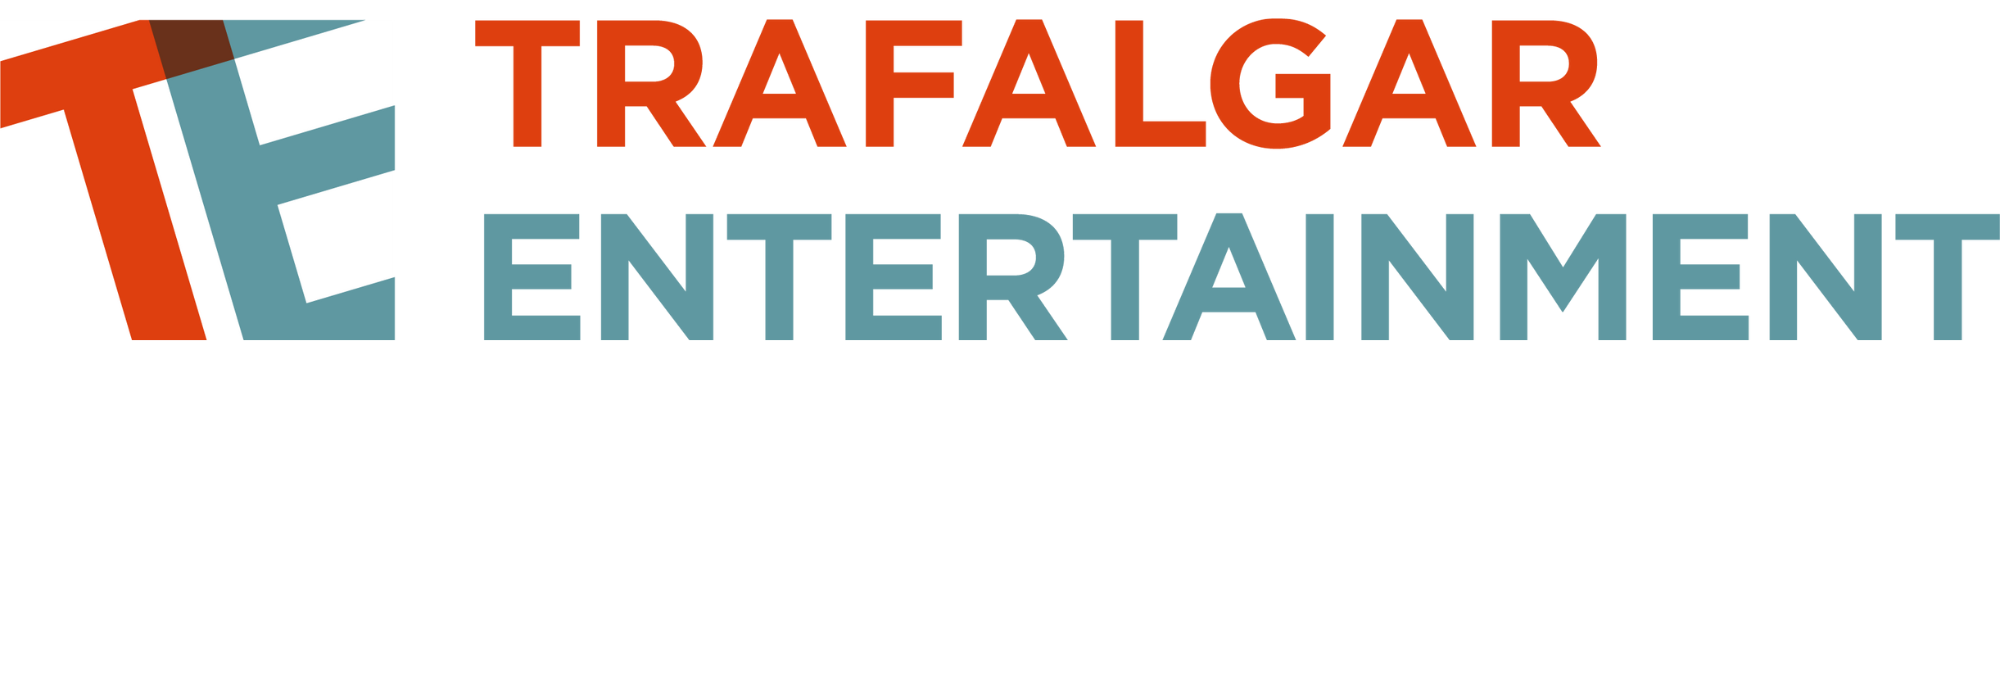 Trafalgar Entertainment Group